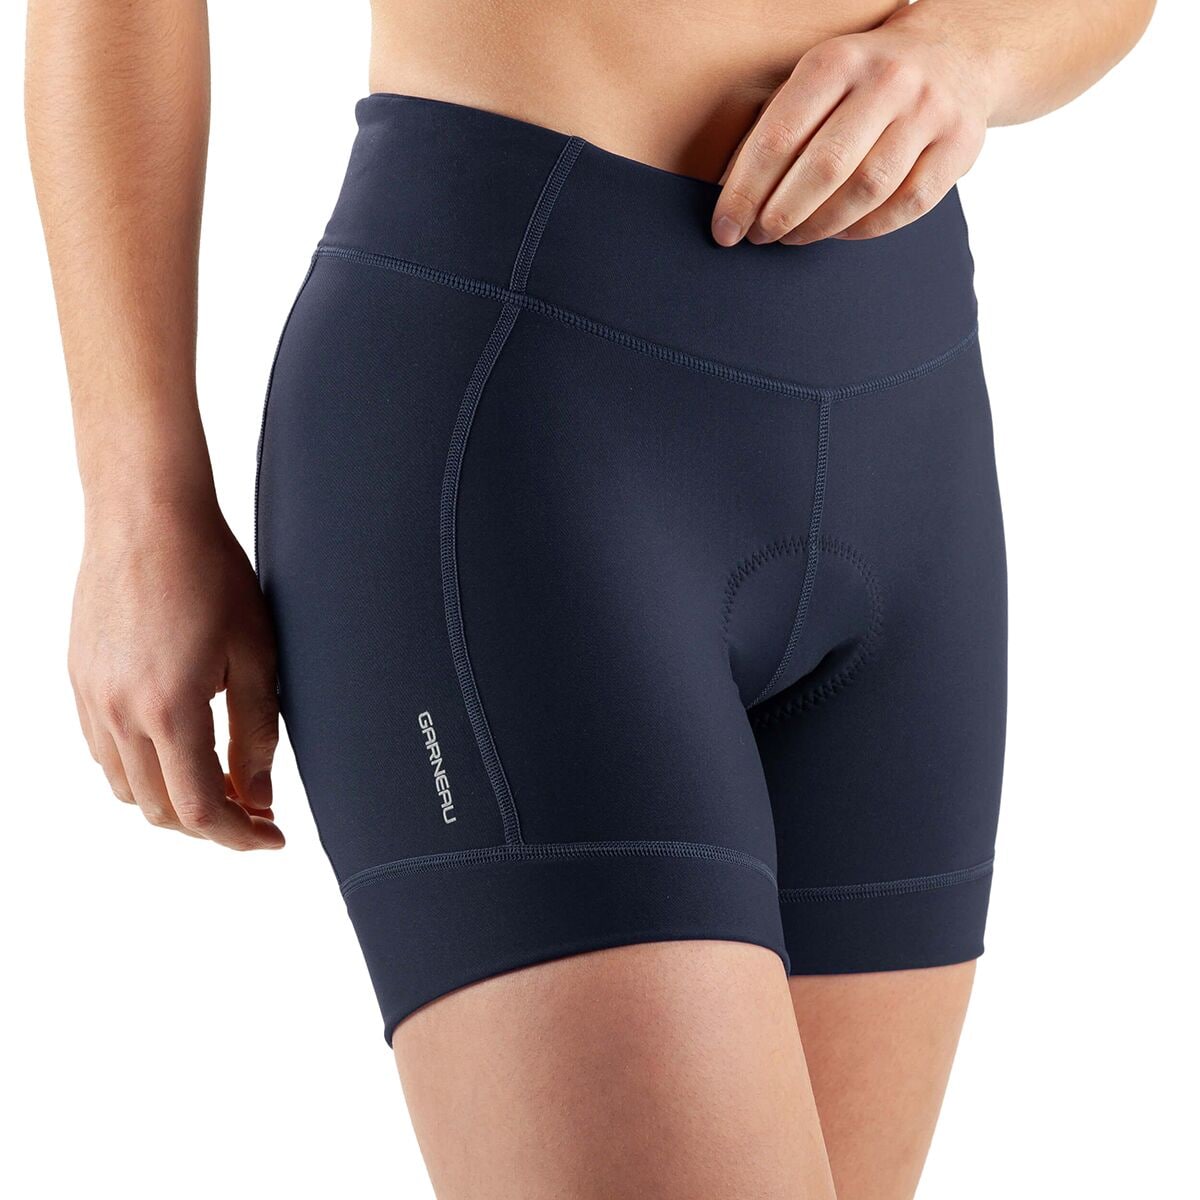 LOUIS GARNEAU Men's Fit Sensor 2 Bike Shorts